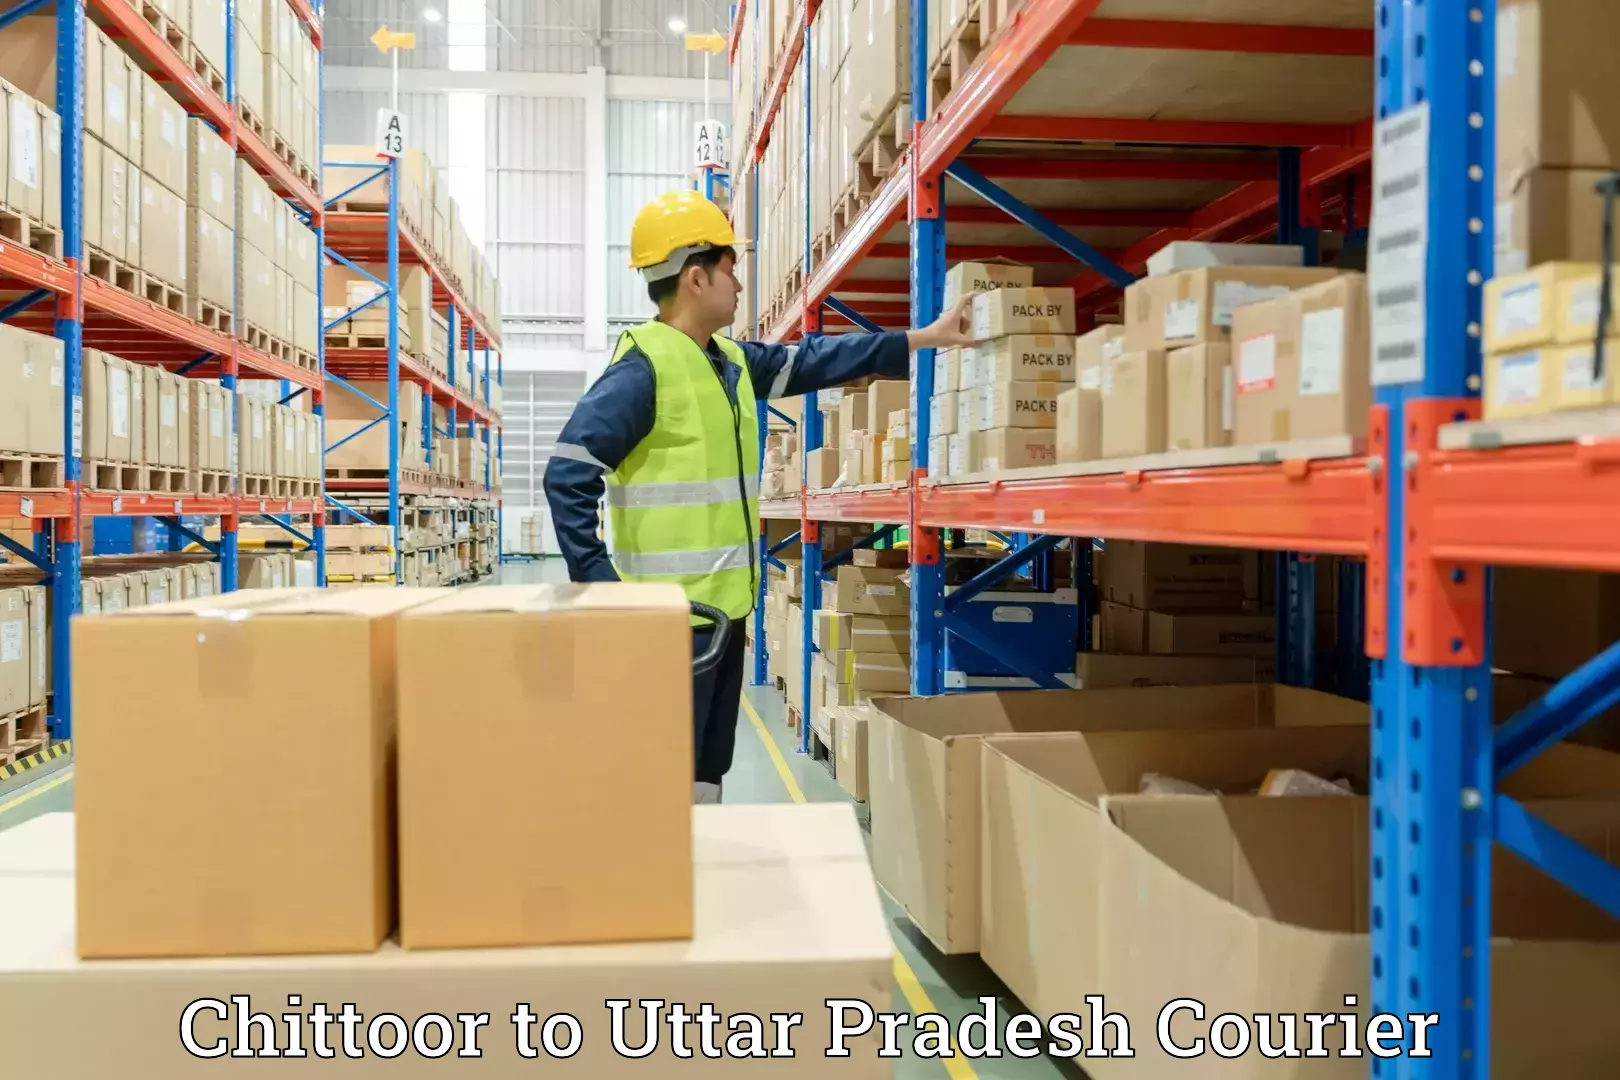 Home relocation experts Chittoor to Uttar Pradesh